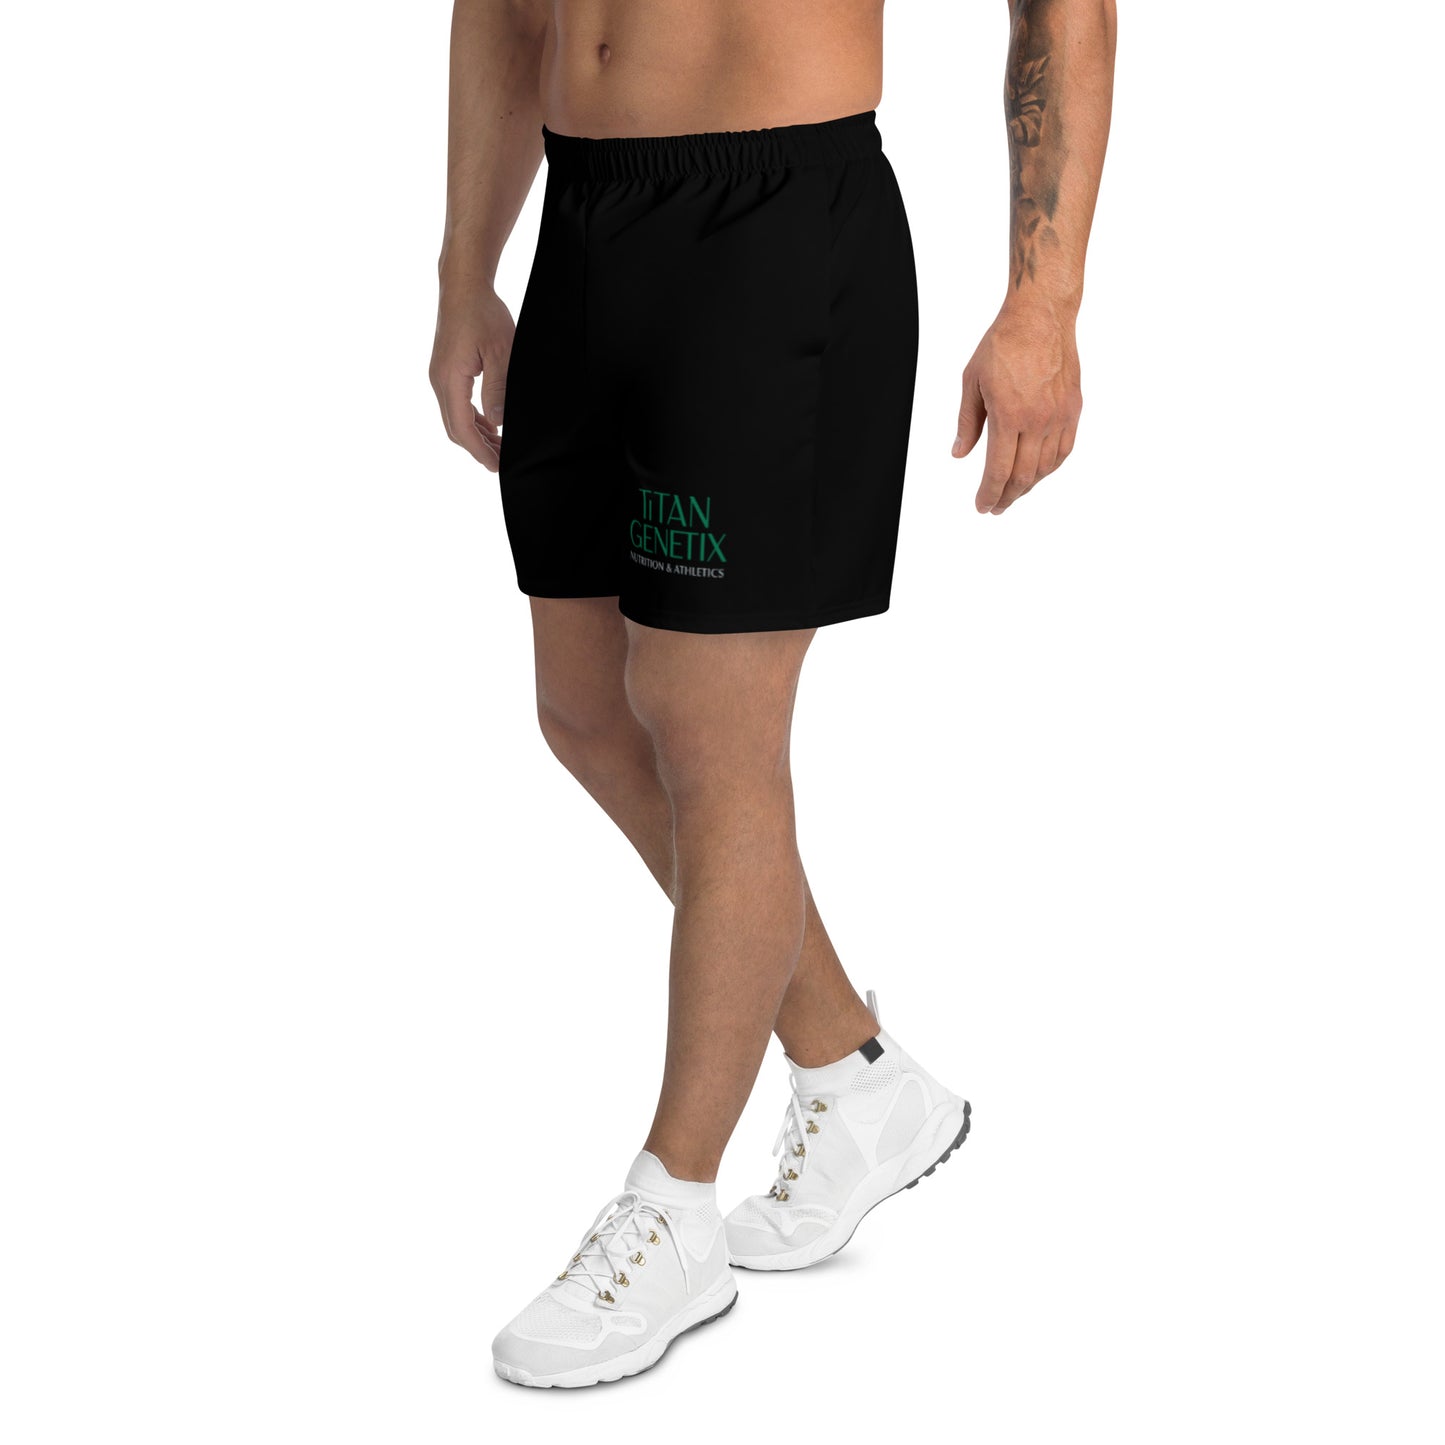 Titan Genetix Nutrition & Athletics - Men's Athletic Shorts